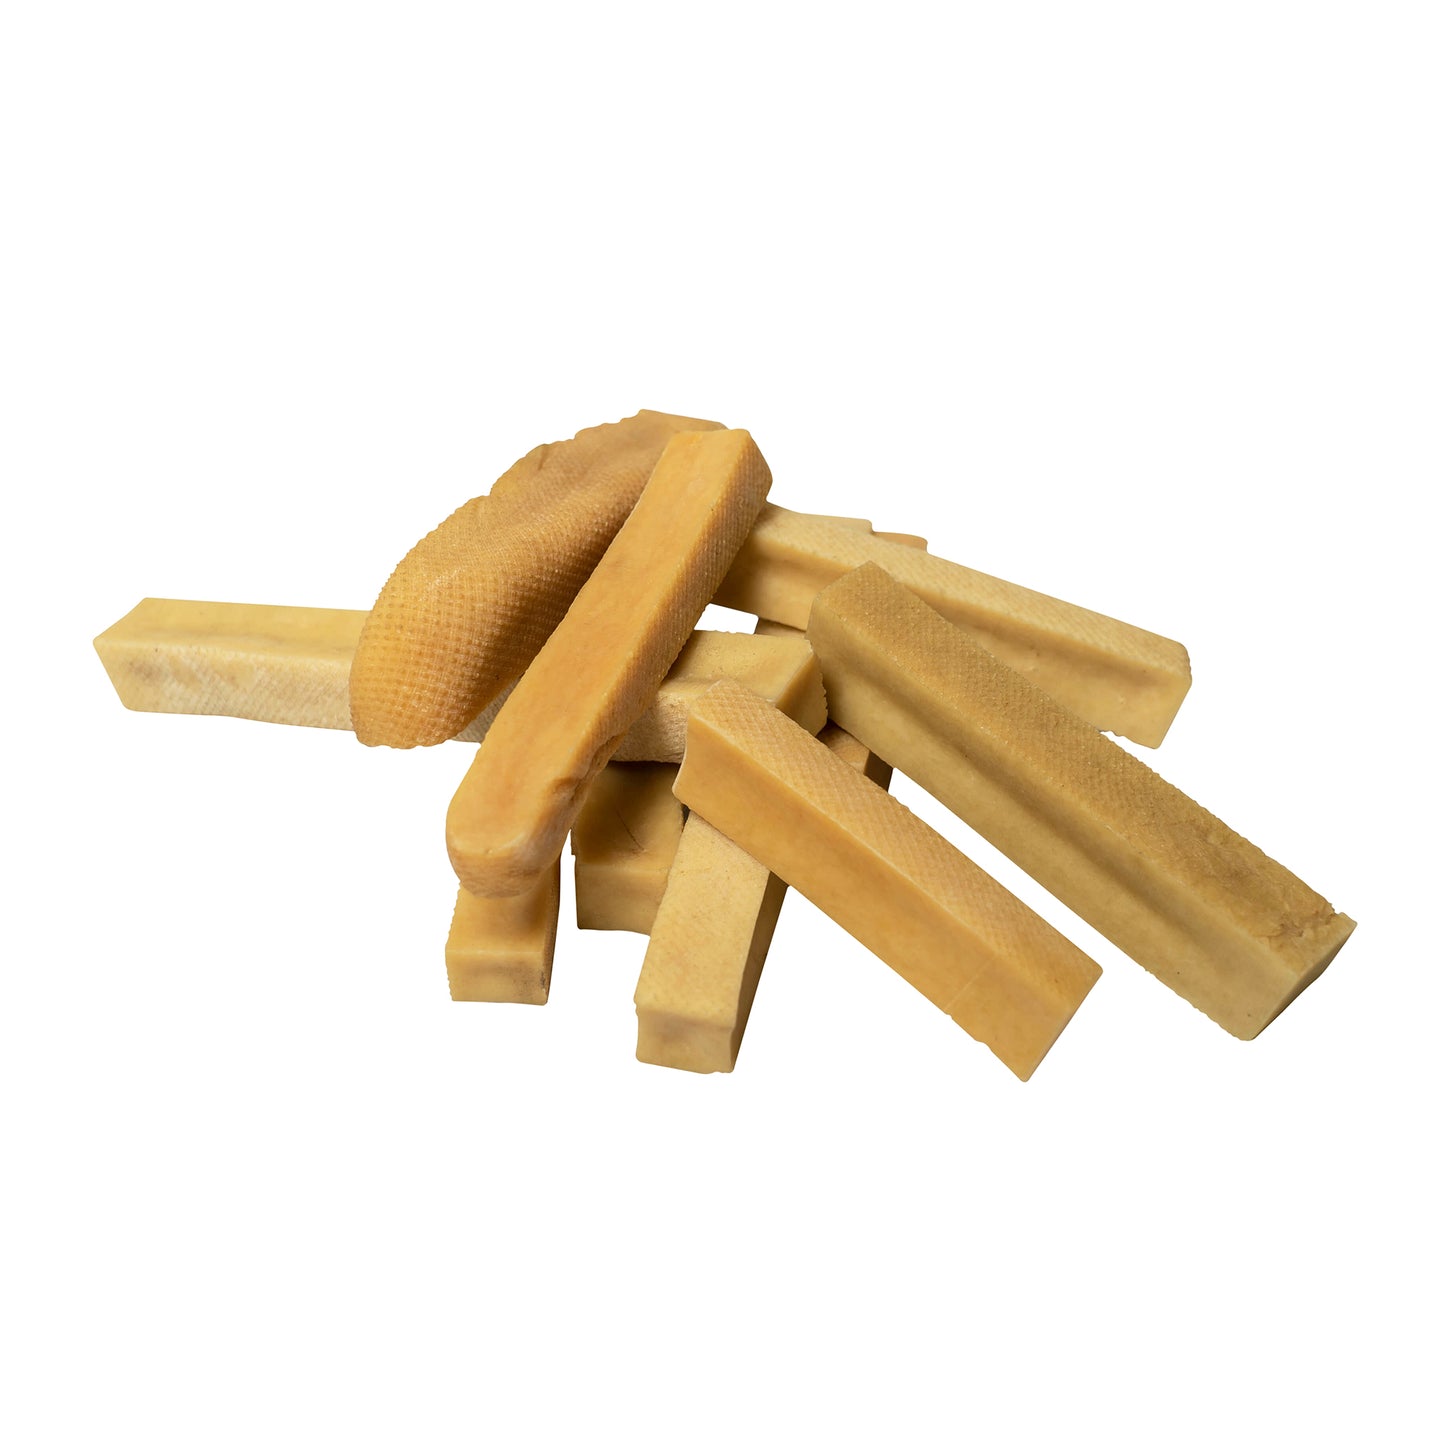 Yak Cheese Churpi Dog Chews-2 Count-5.5 oz